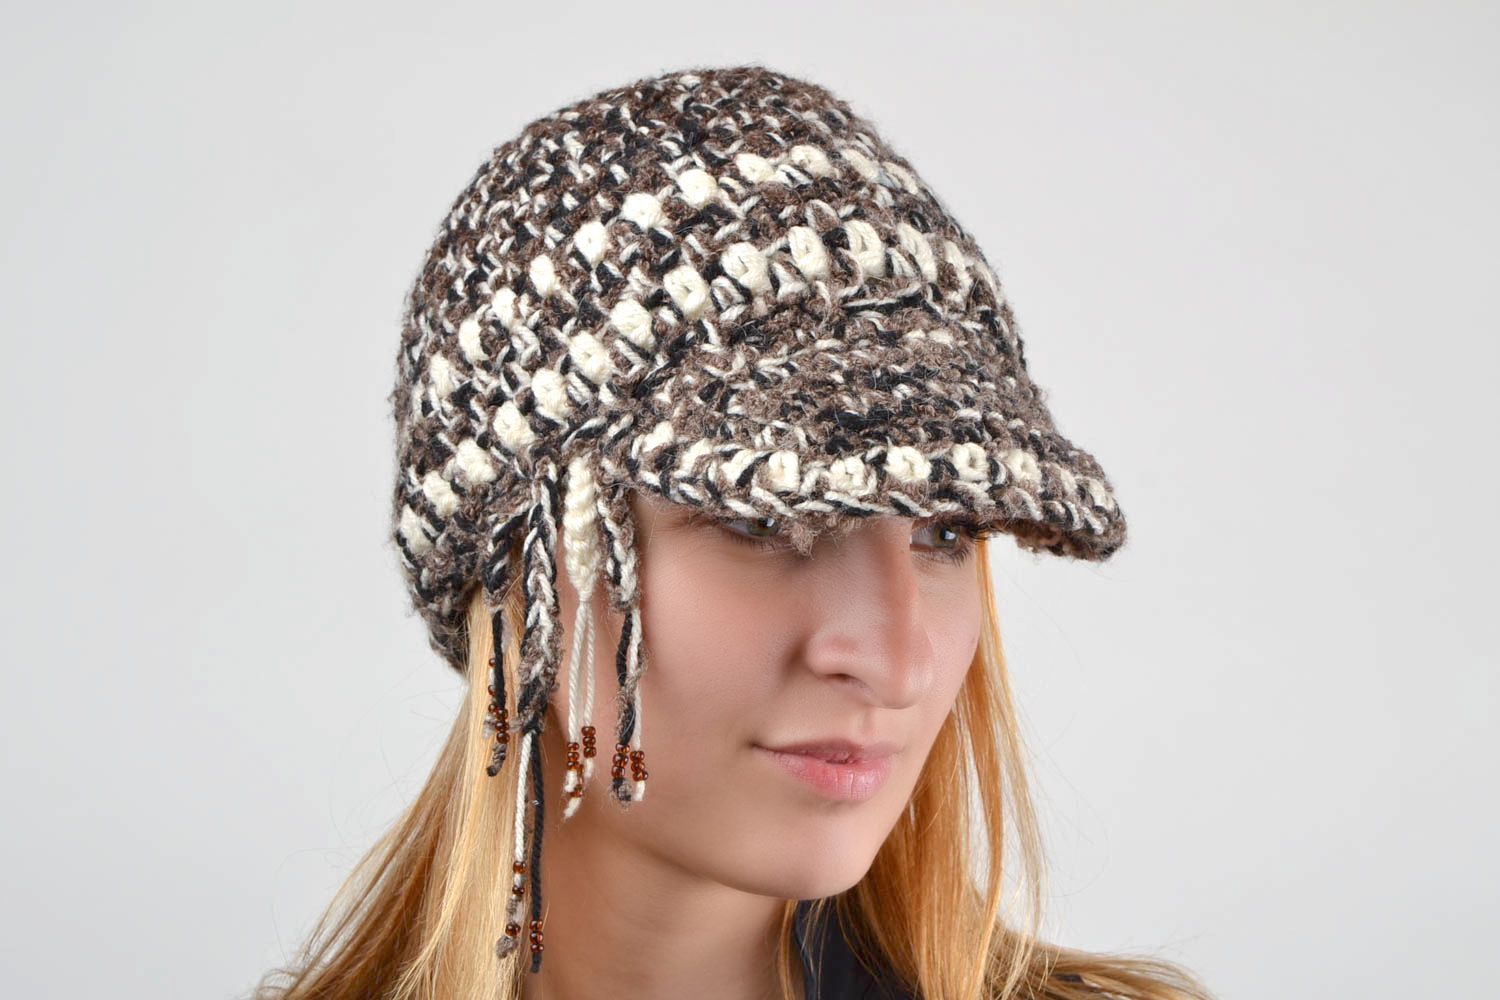 Unique handmade crocheted hat designer winter clothes accessory stylish present photo 1